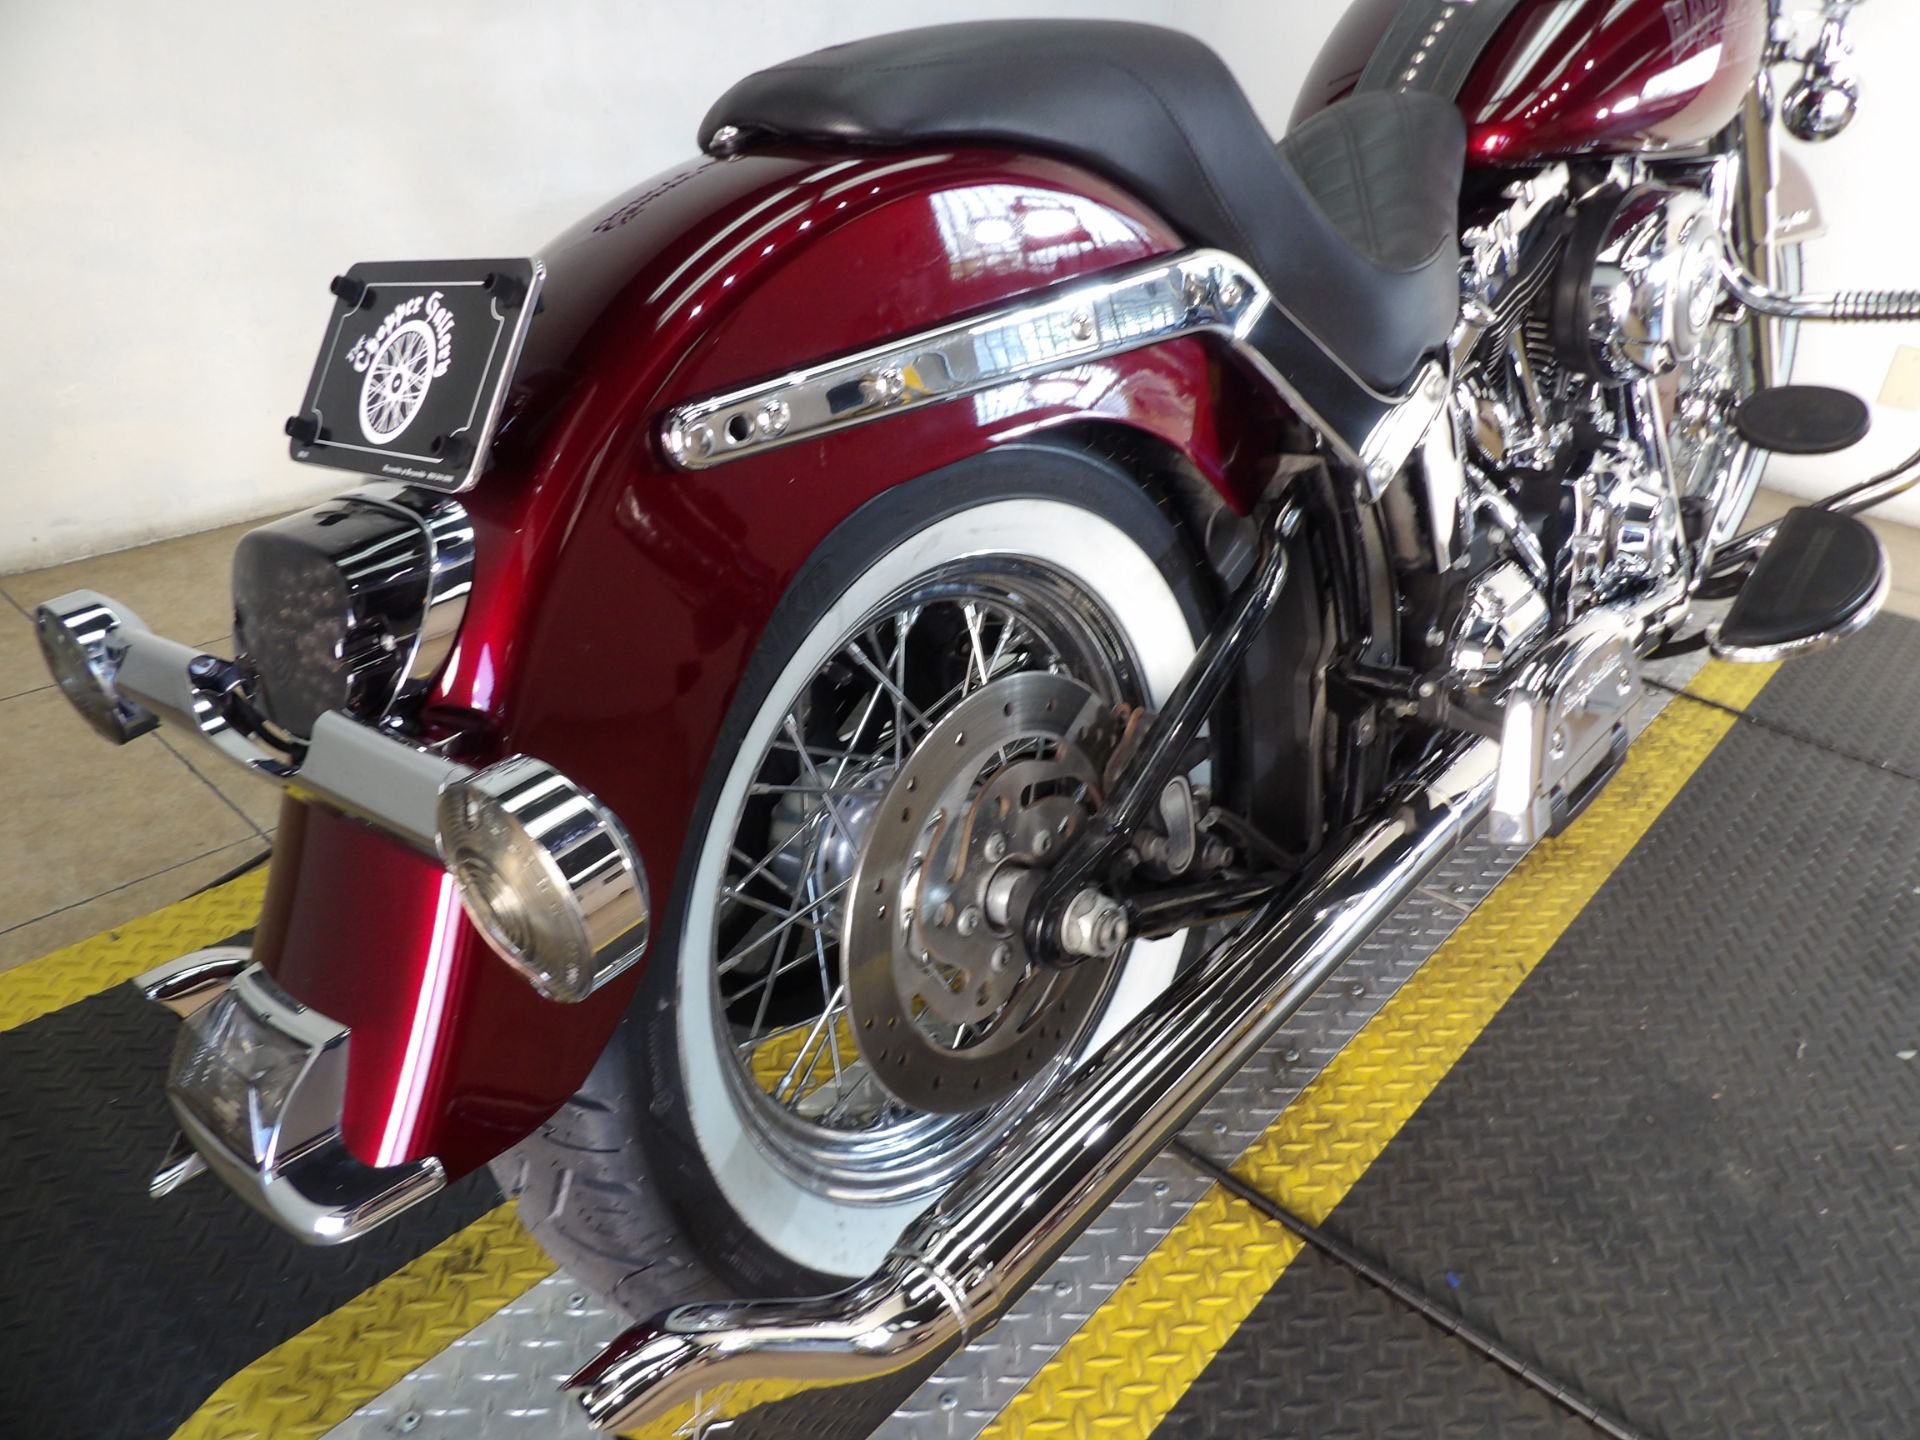 2011 Harley-Davidson Heritage Softail® Classic in Temecula, California - Photo 31